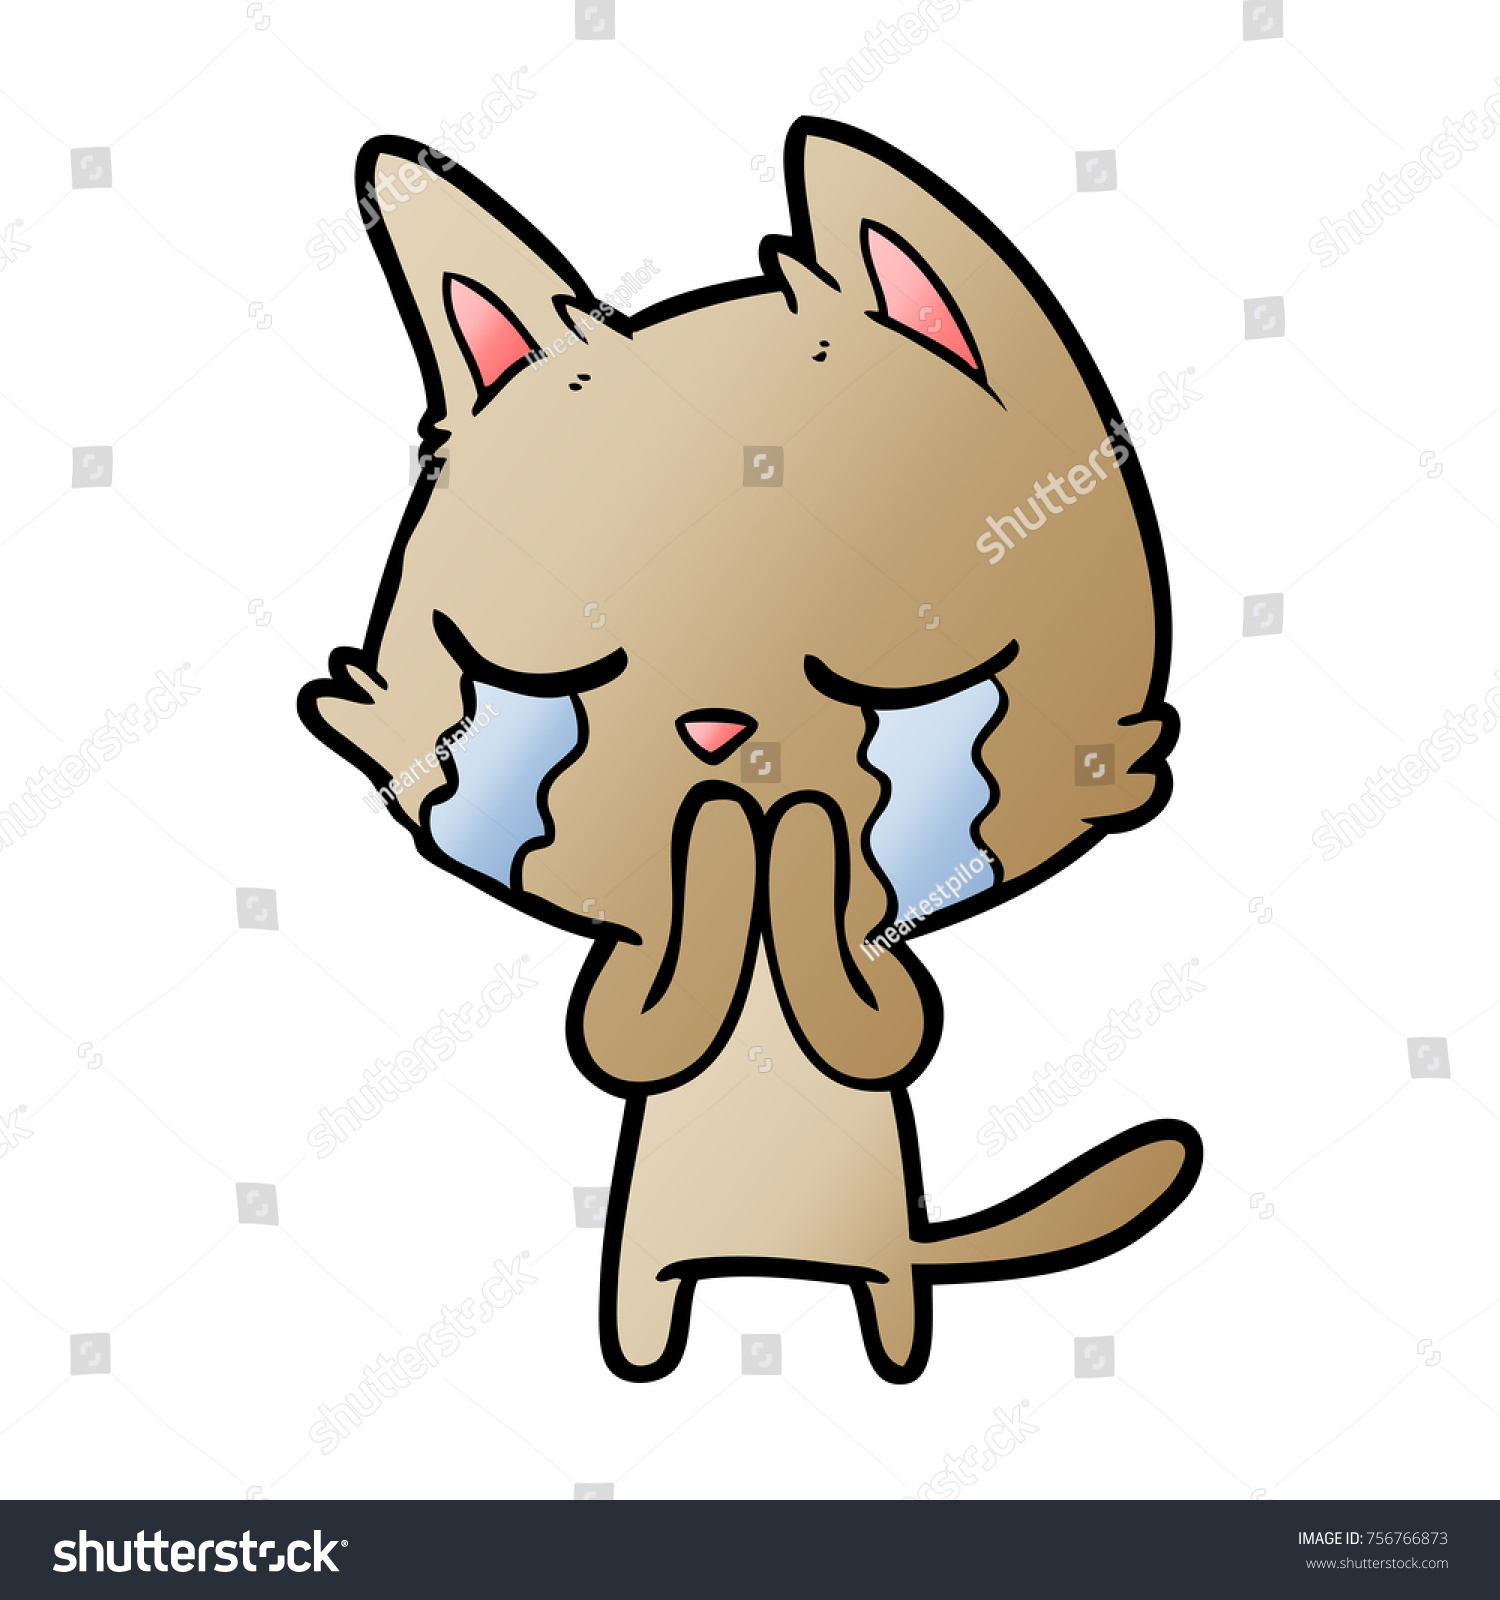 crying cartoon cat #756766873